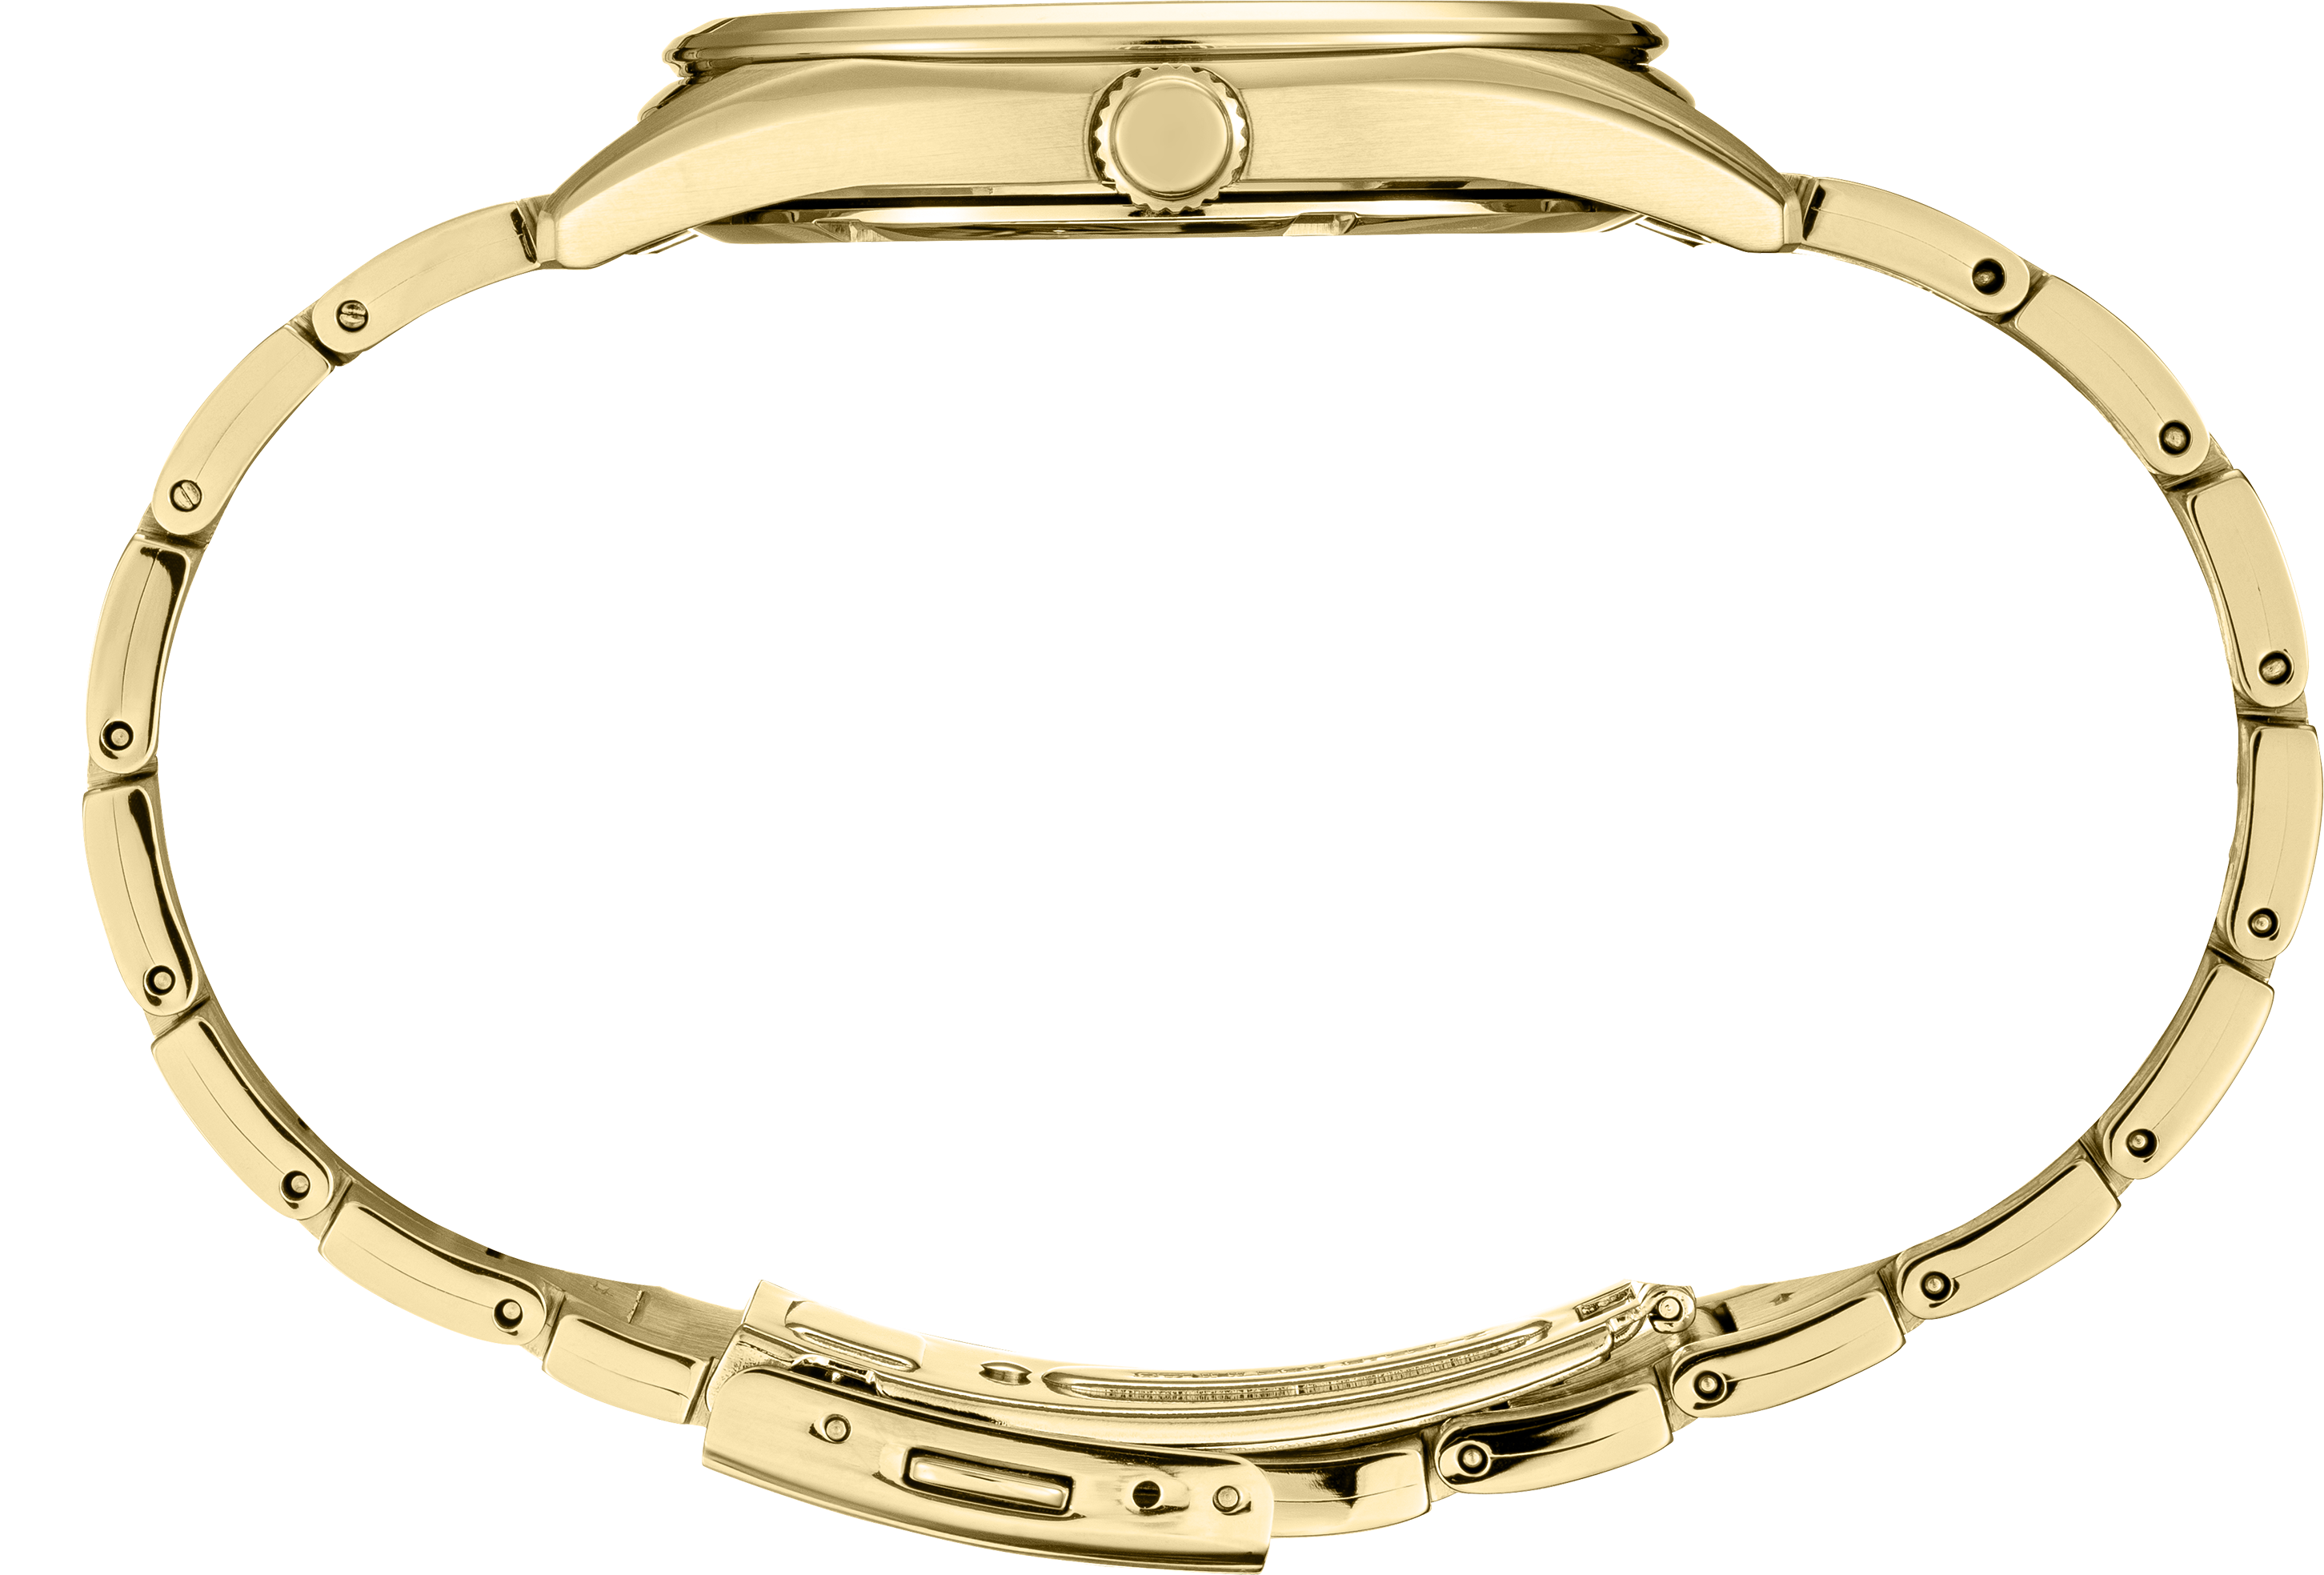 SEIKO MEN'S ESSENTIALS White-Dial Gold Tone Watch